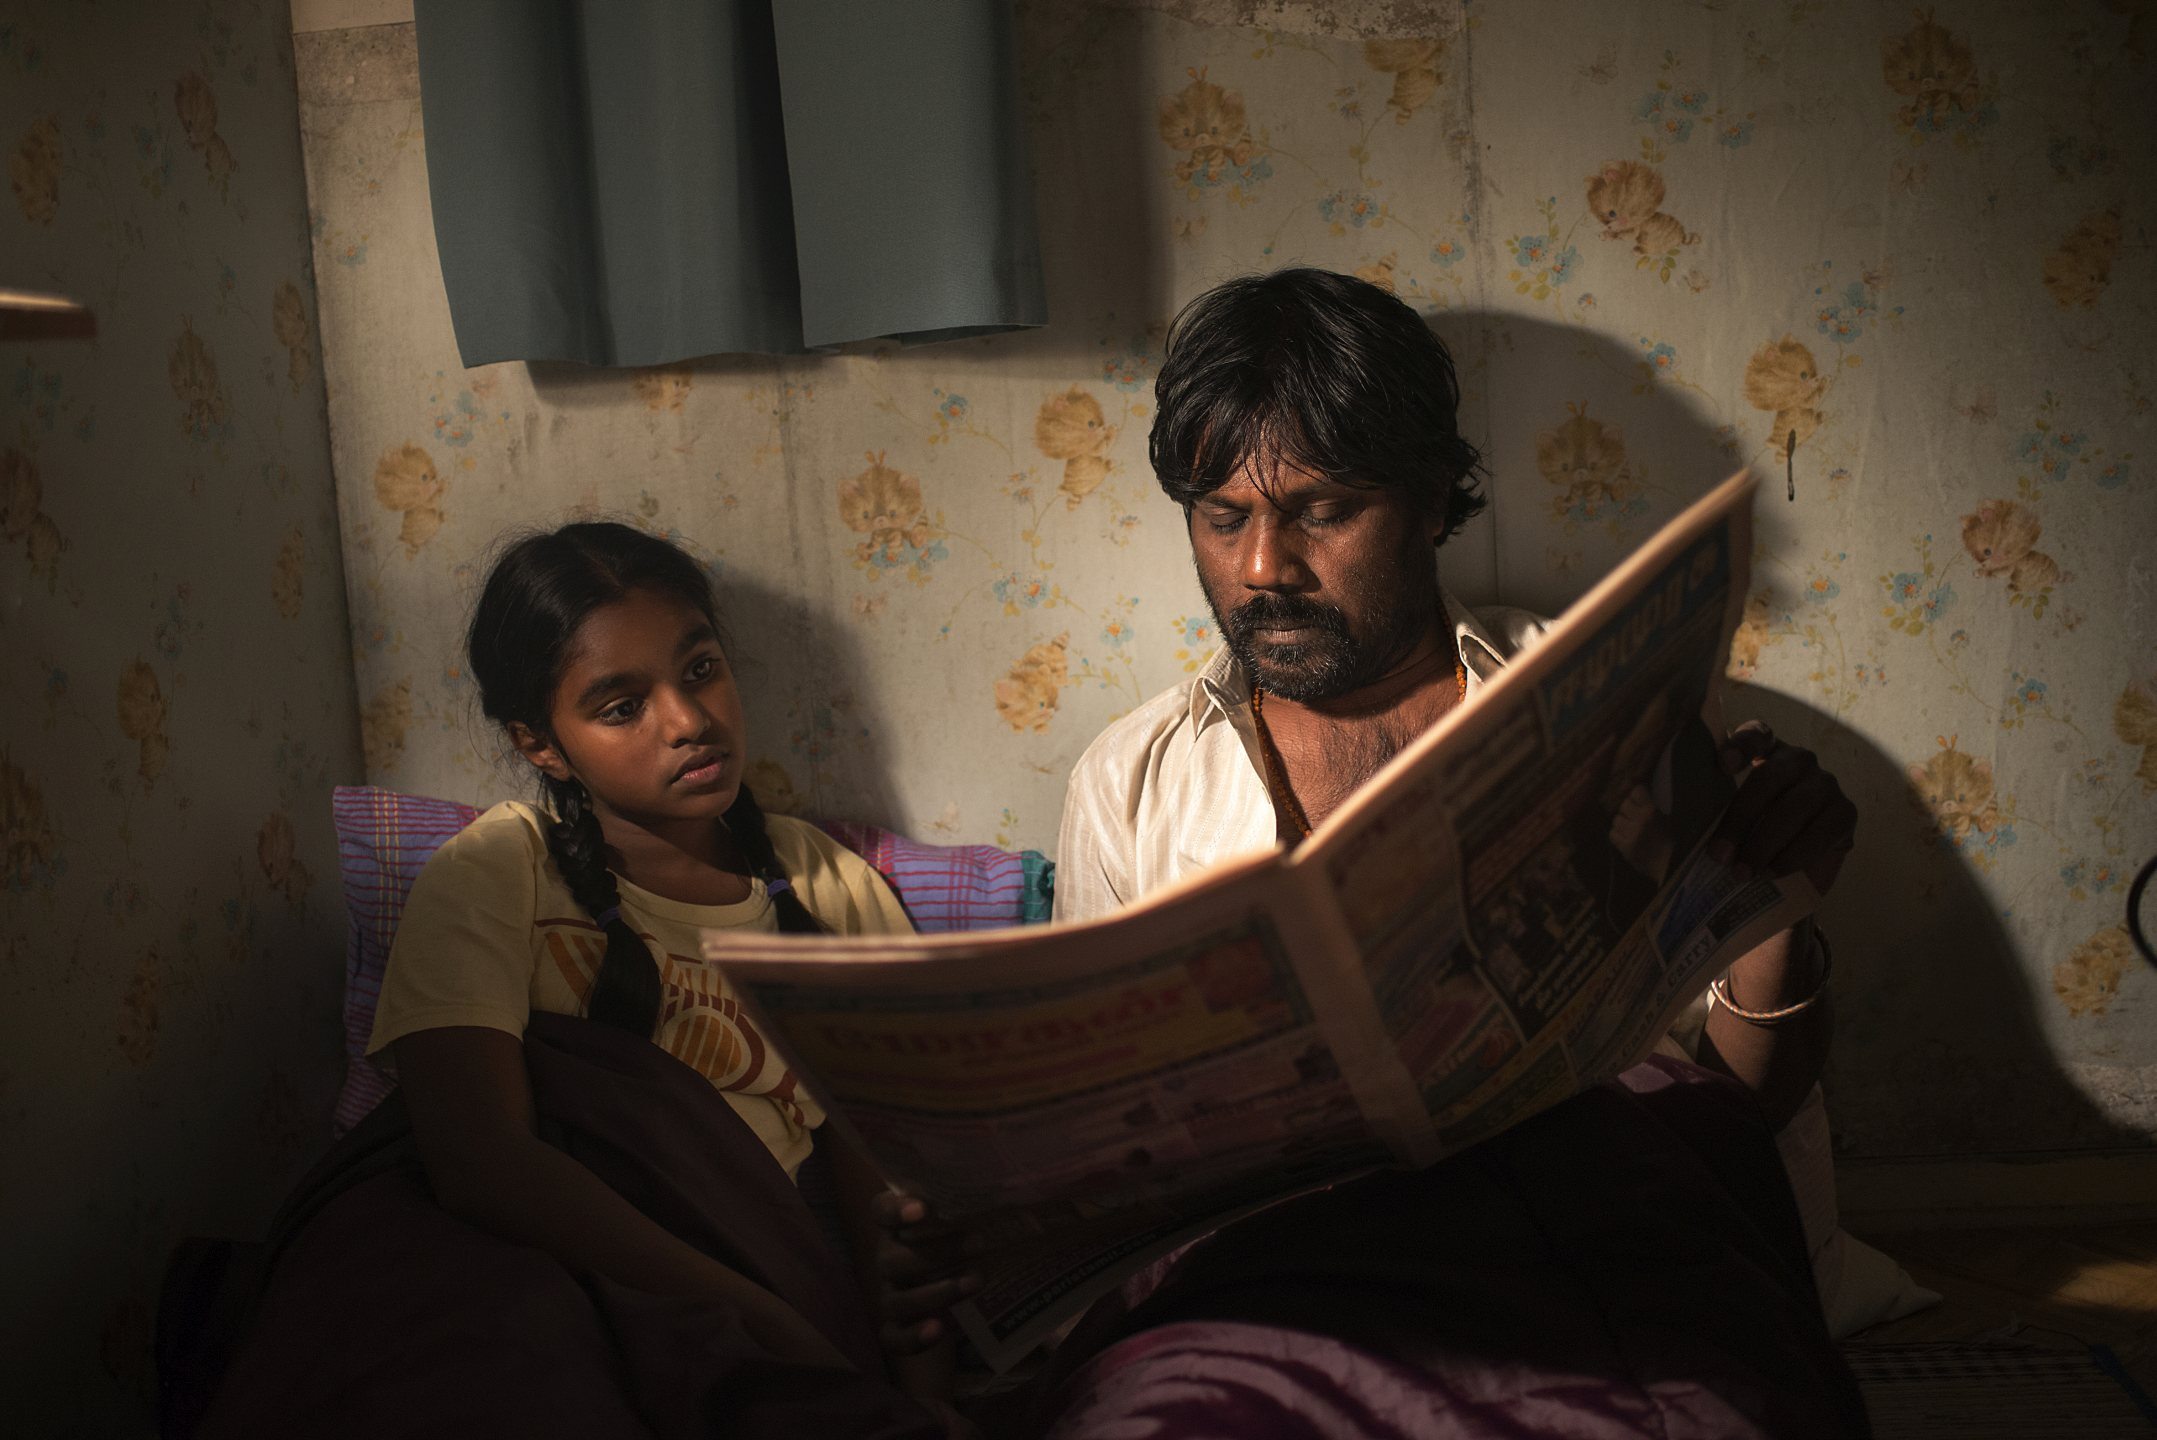 Kadr z filmu „Imigranci / Dheepan” (2015)